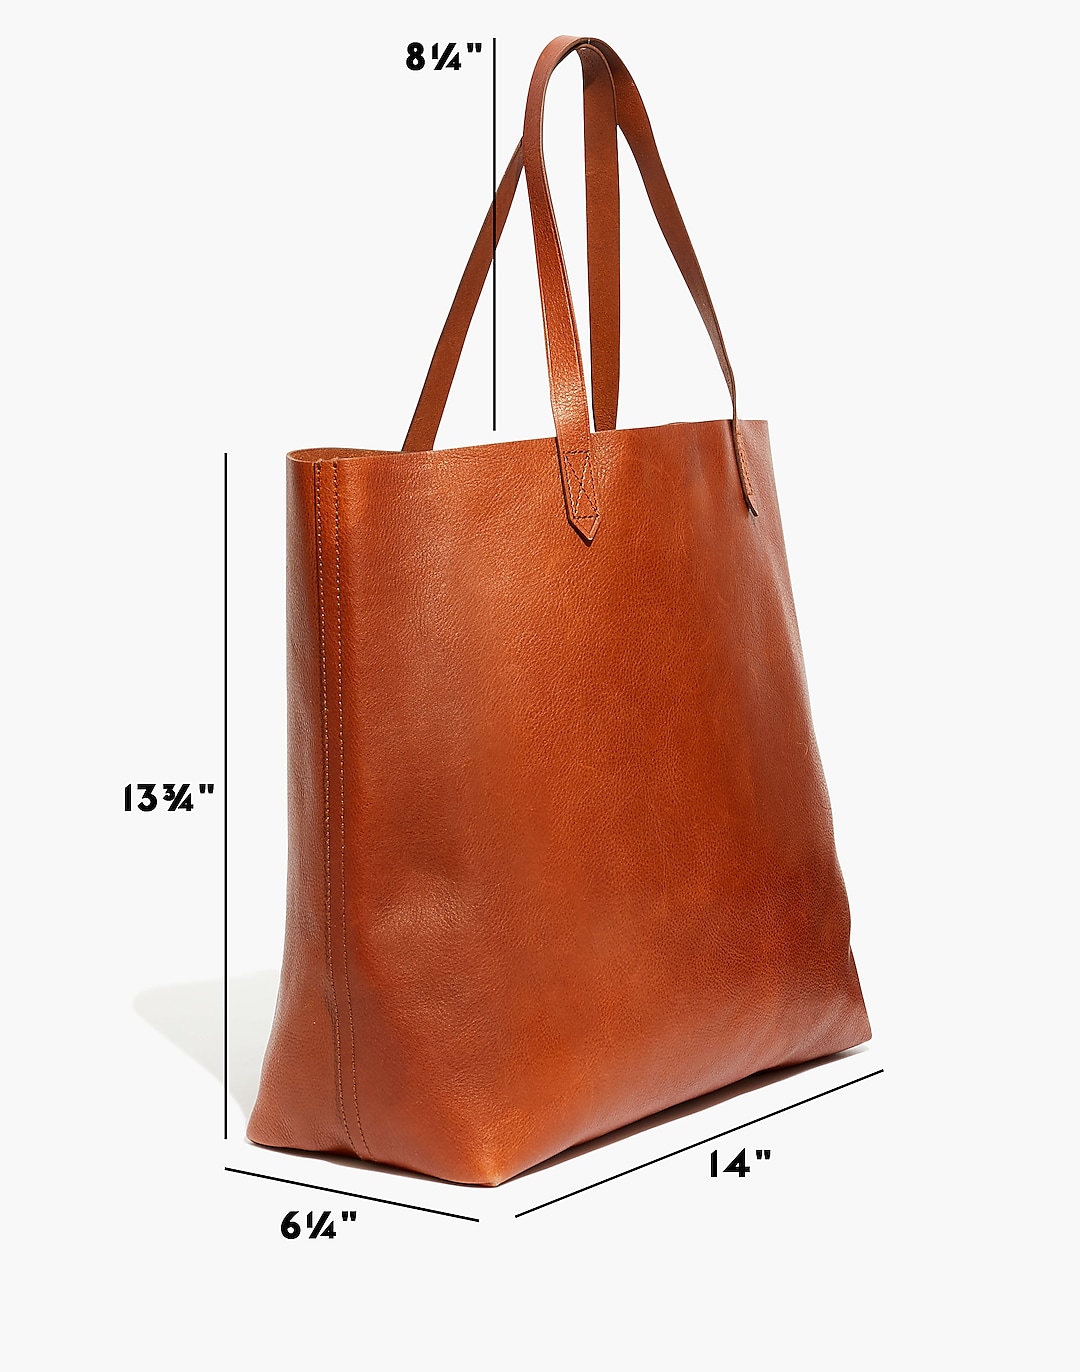 Range Bags - Golf Ball Storage Bag Cordura – Madewell Products